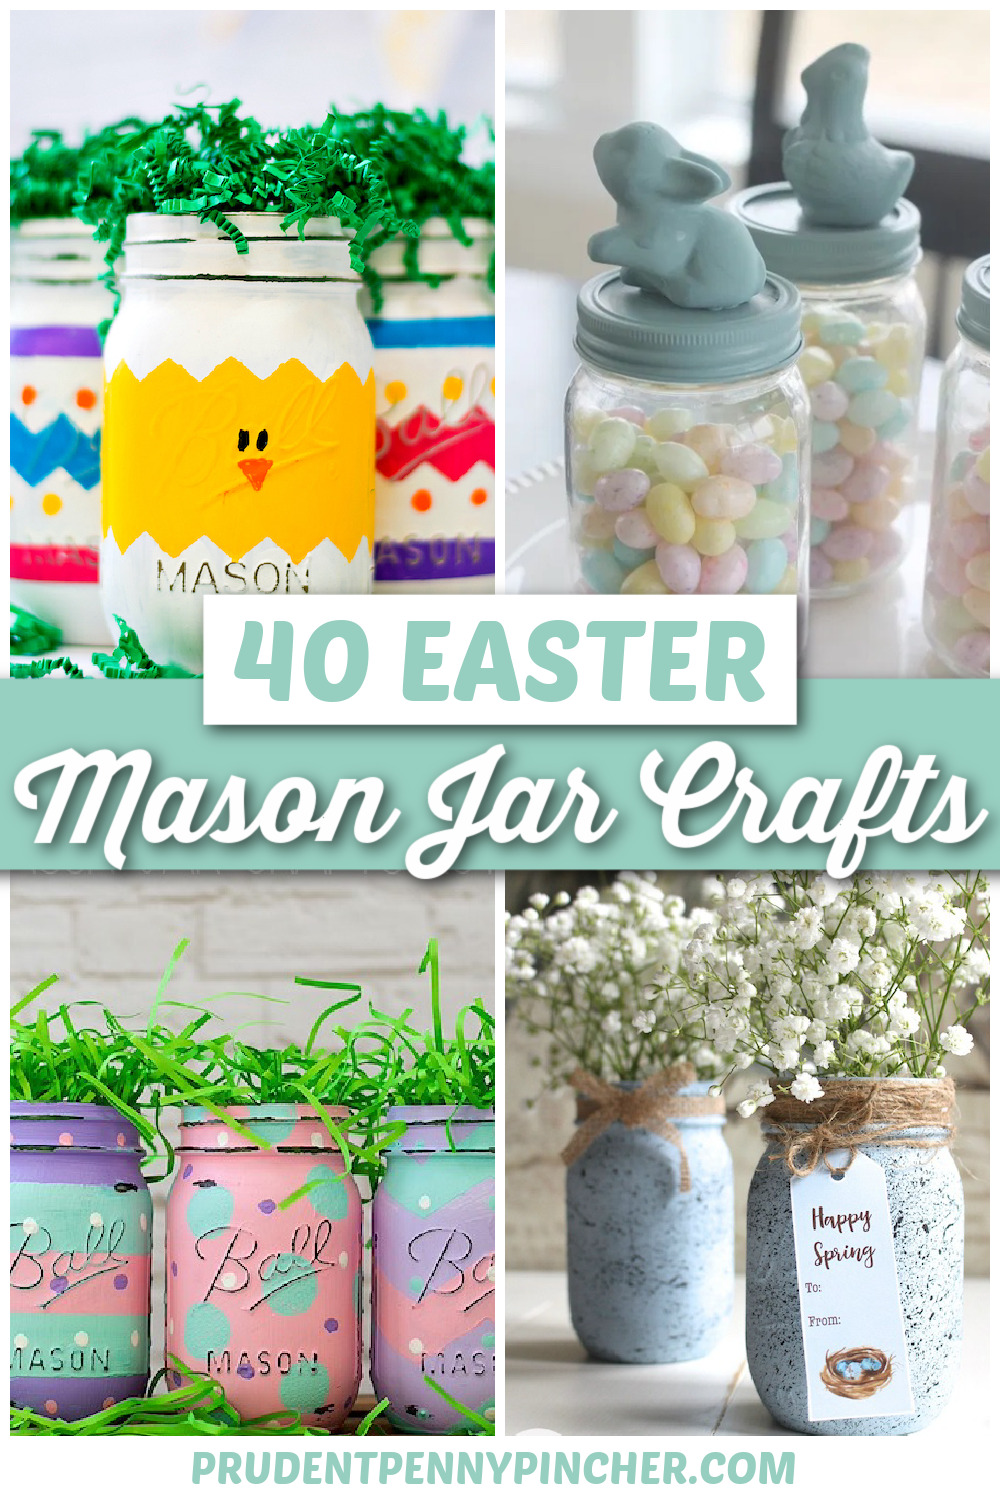 Mason Jar Crafts & DIY Projects - Crafts by Amanda